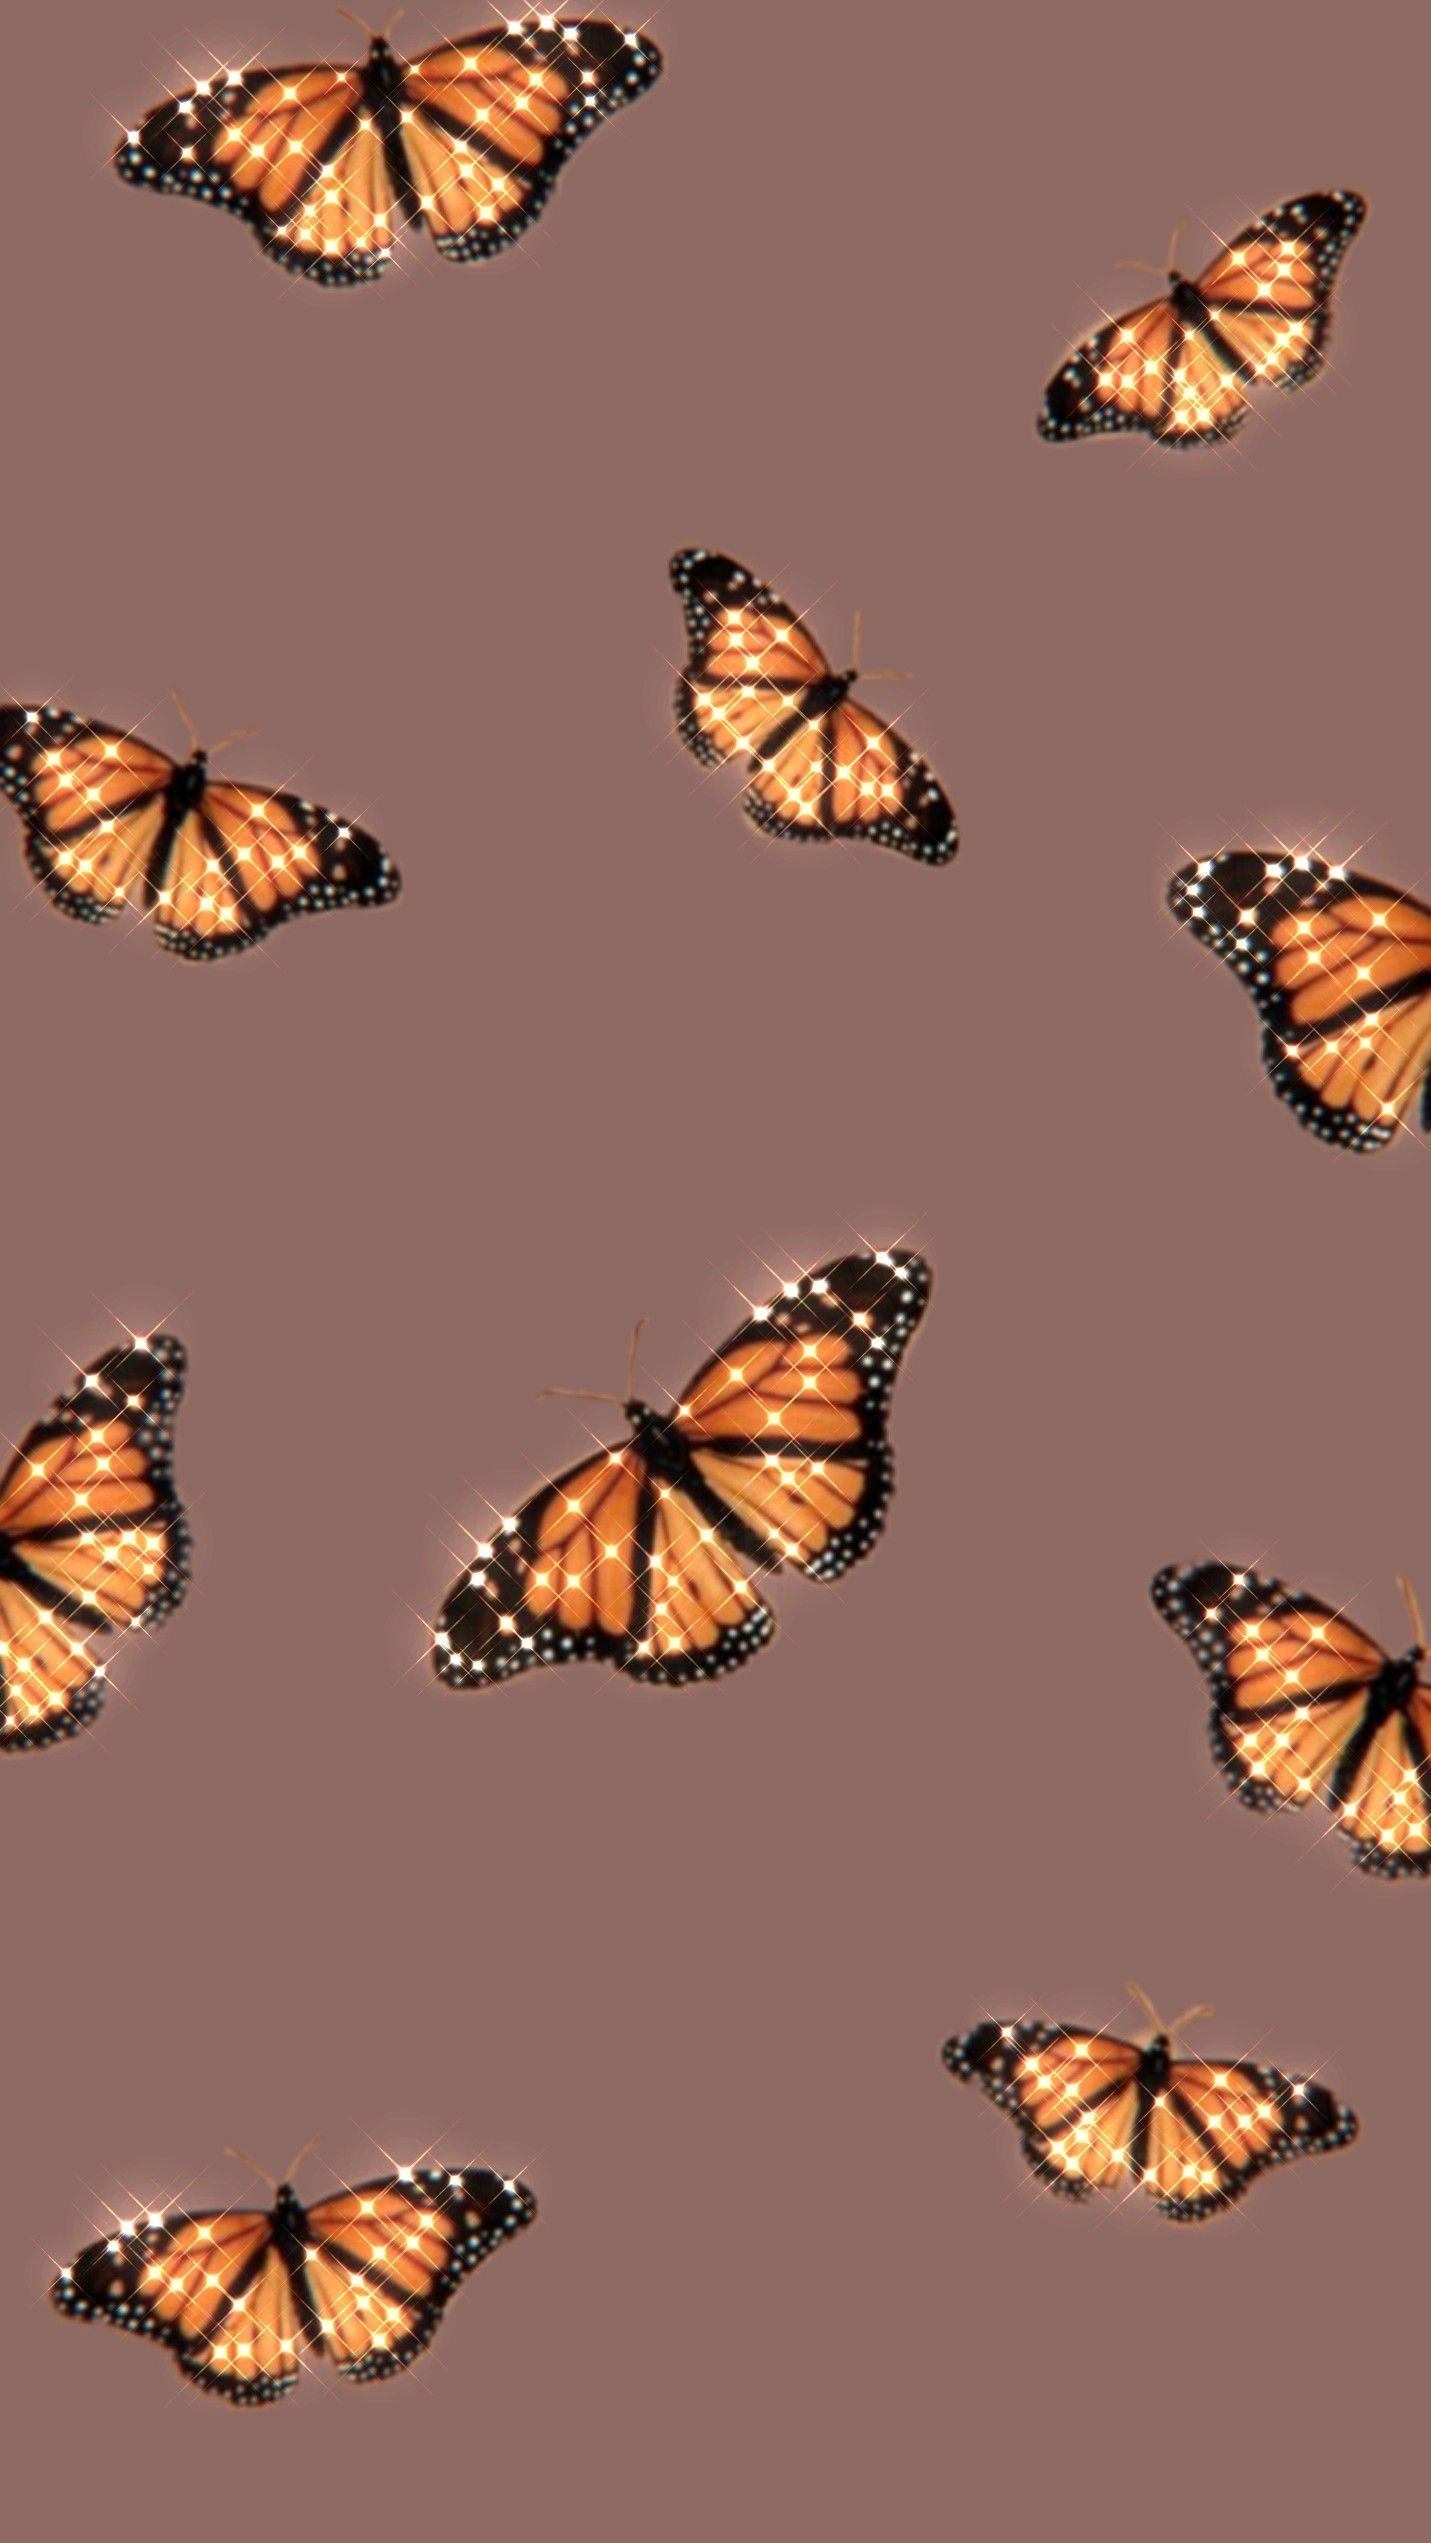 Aesthetic Wallpaper With Butterflies